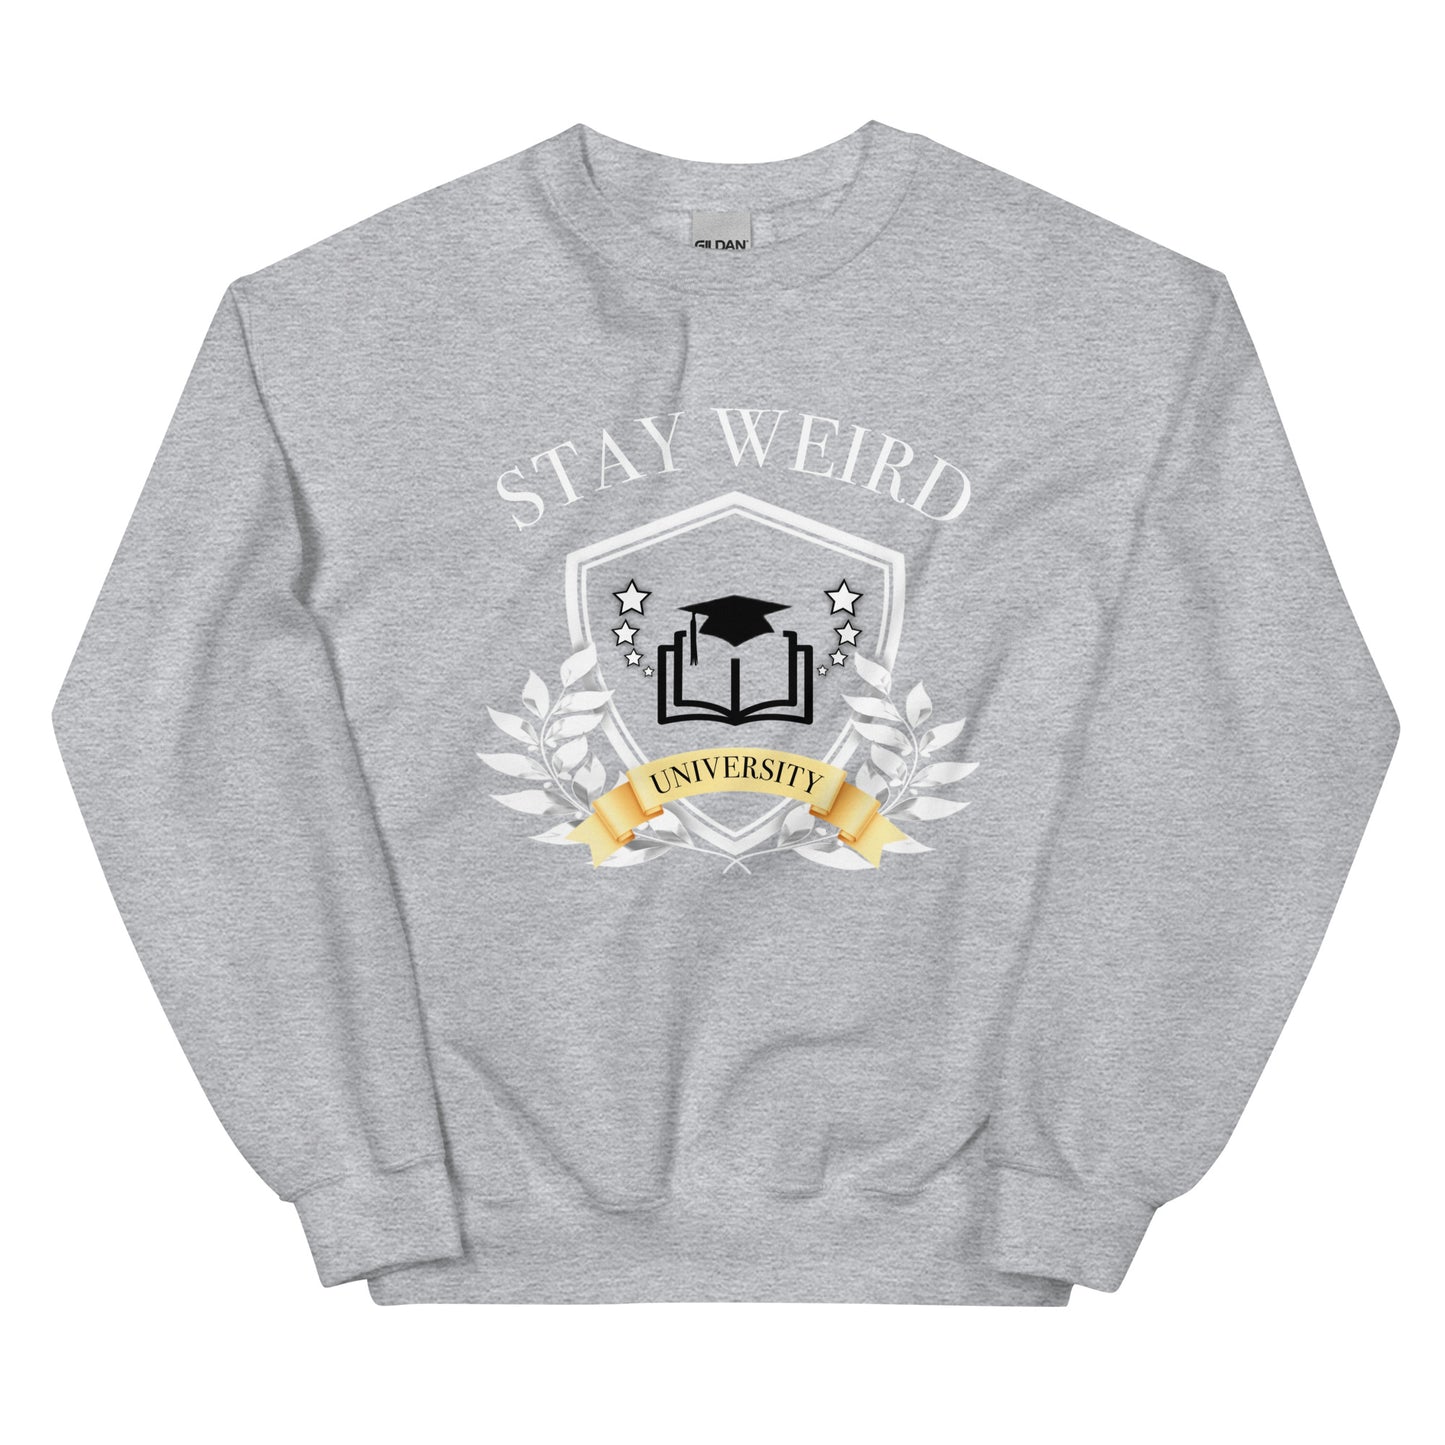 Stay Weird University Sweatshirt